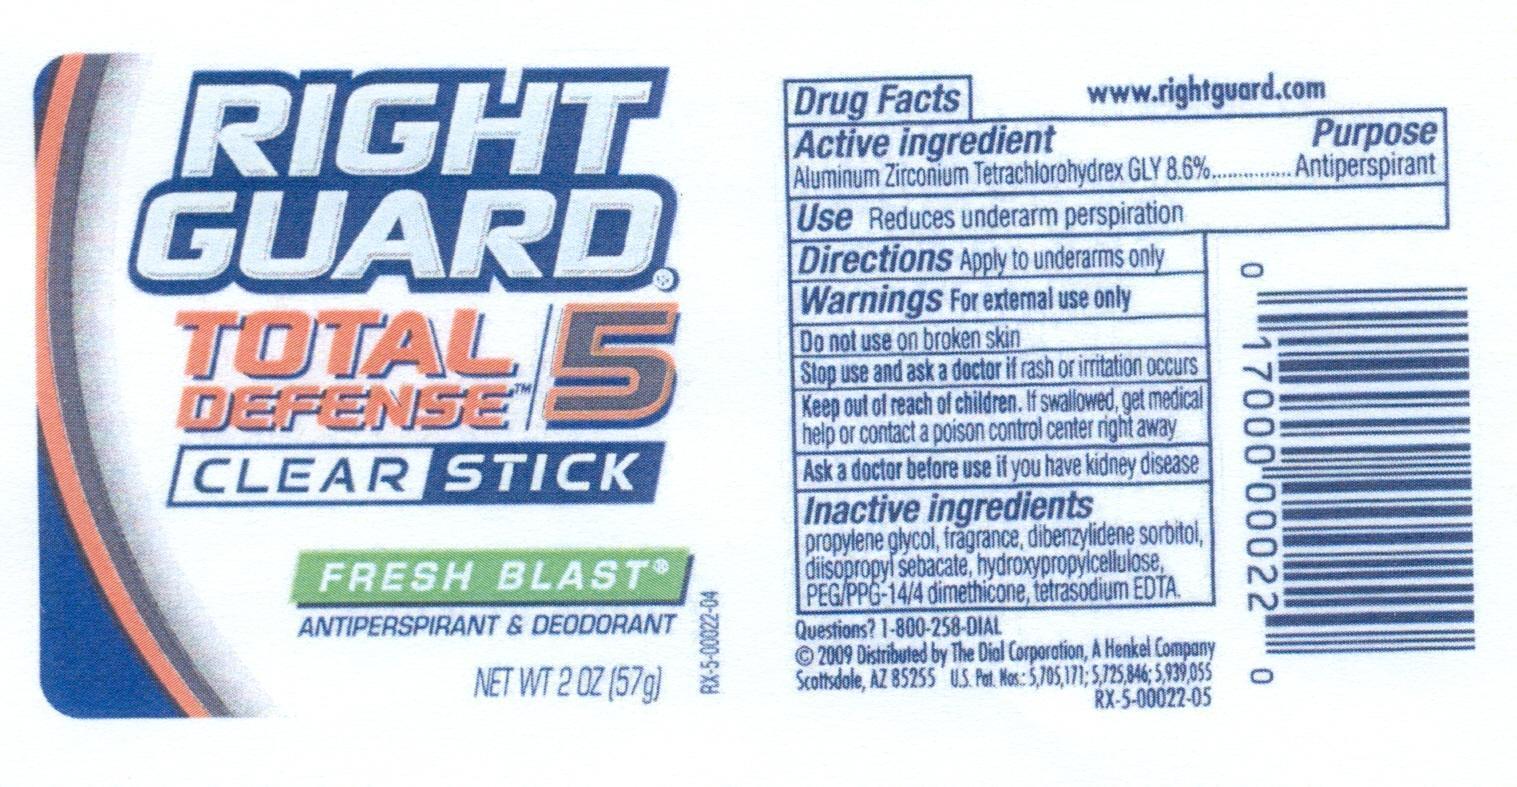 Right Guard Fresh Blast Label Image